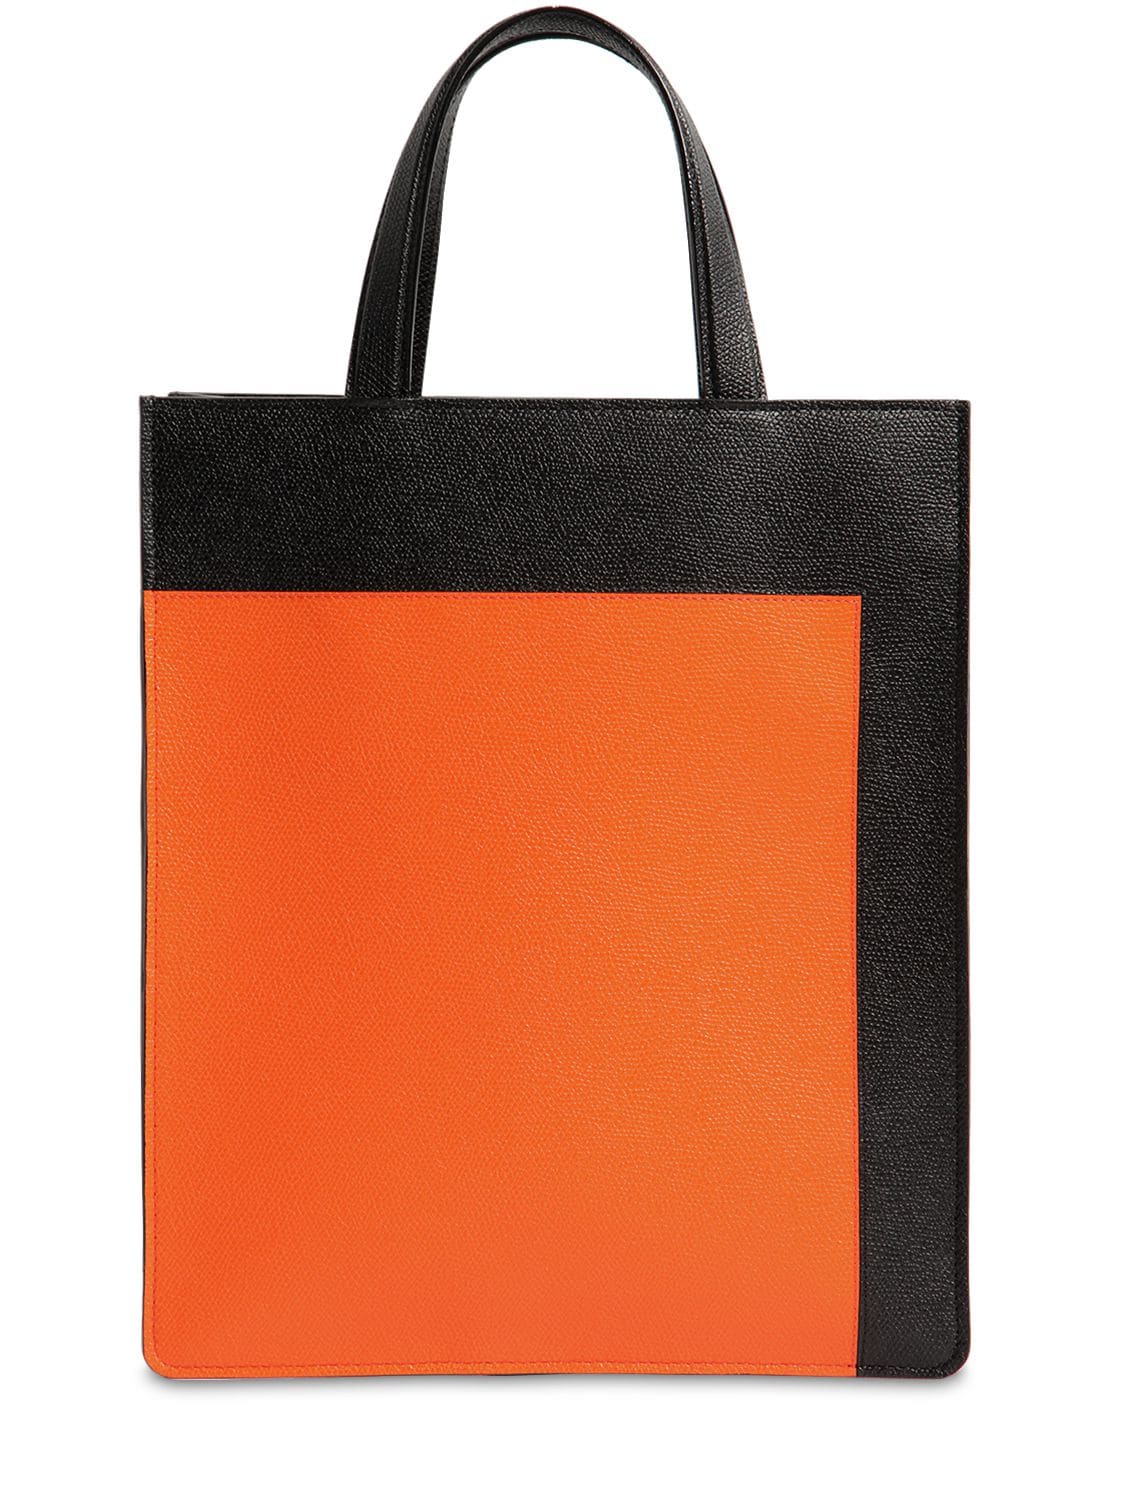 Valextra Boxy Small Color Block Leather Tote Bag In Black,orange